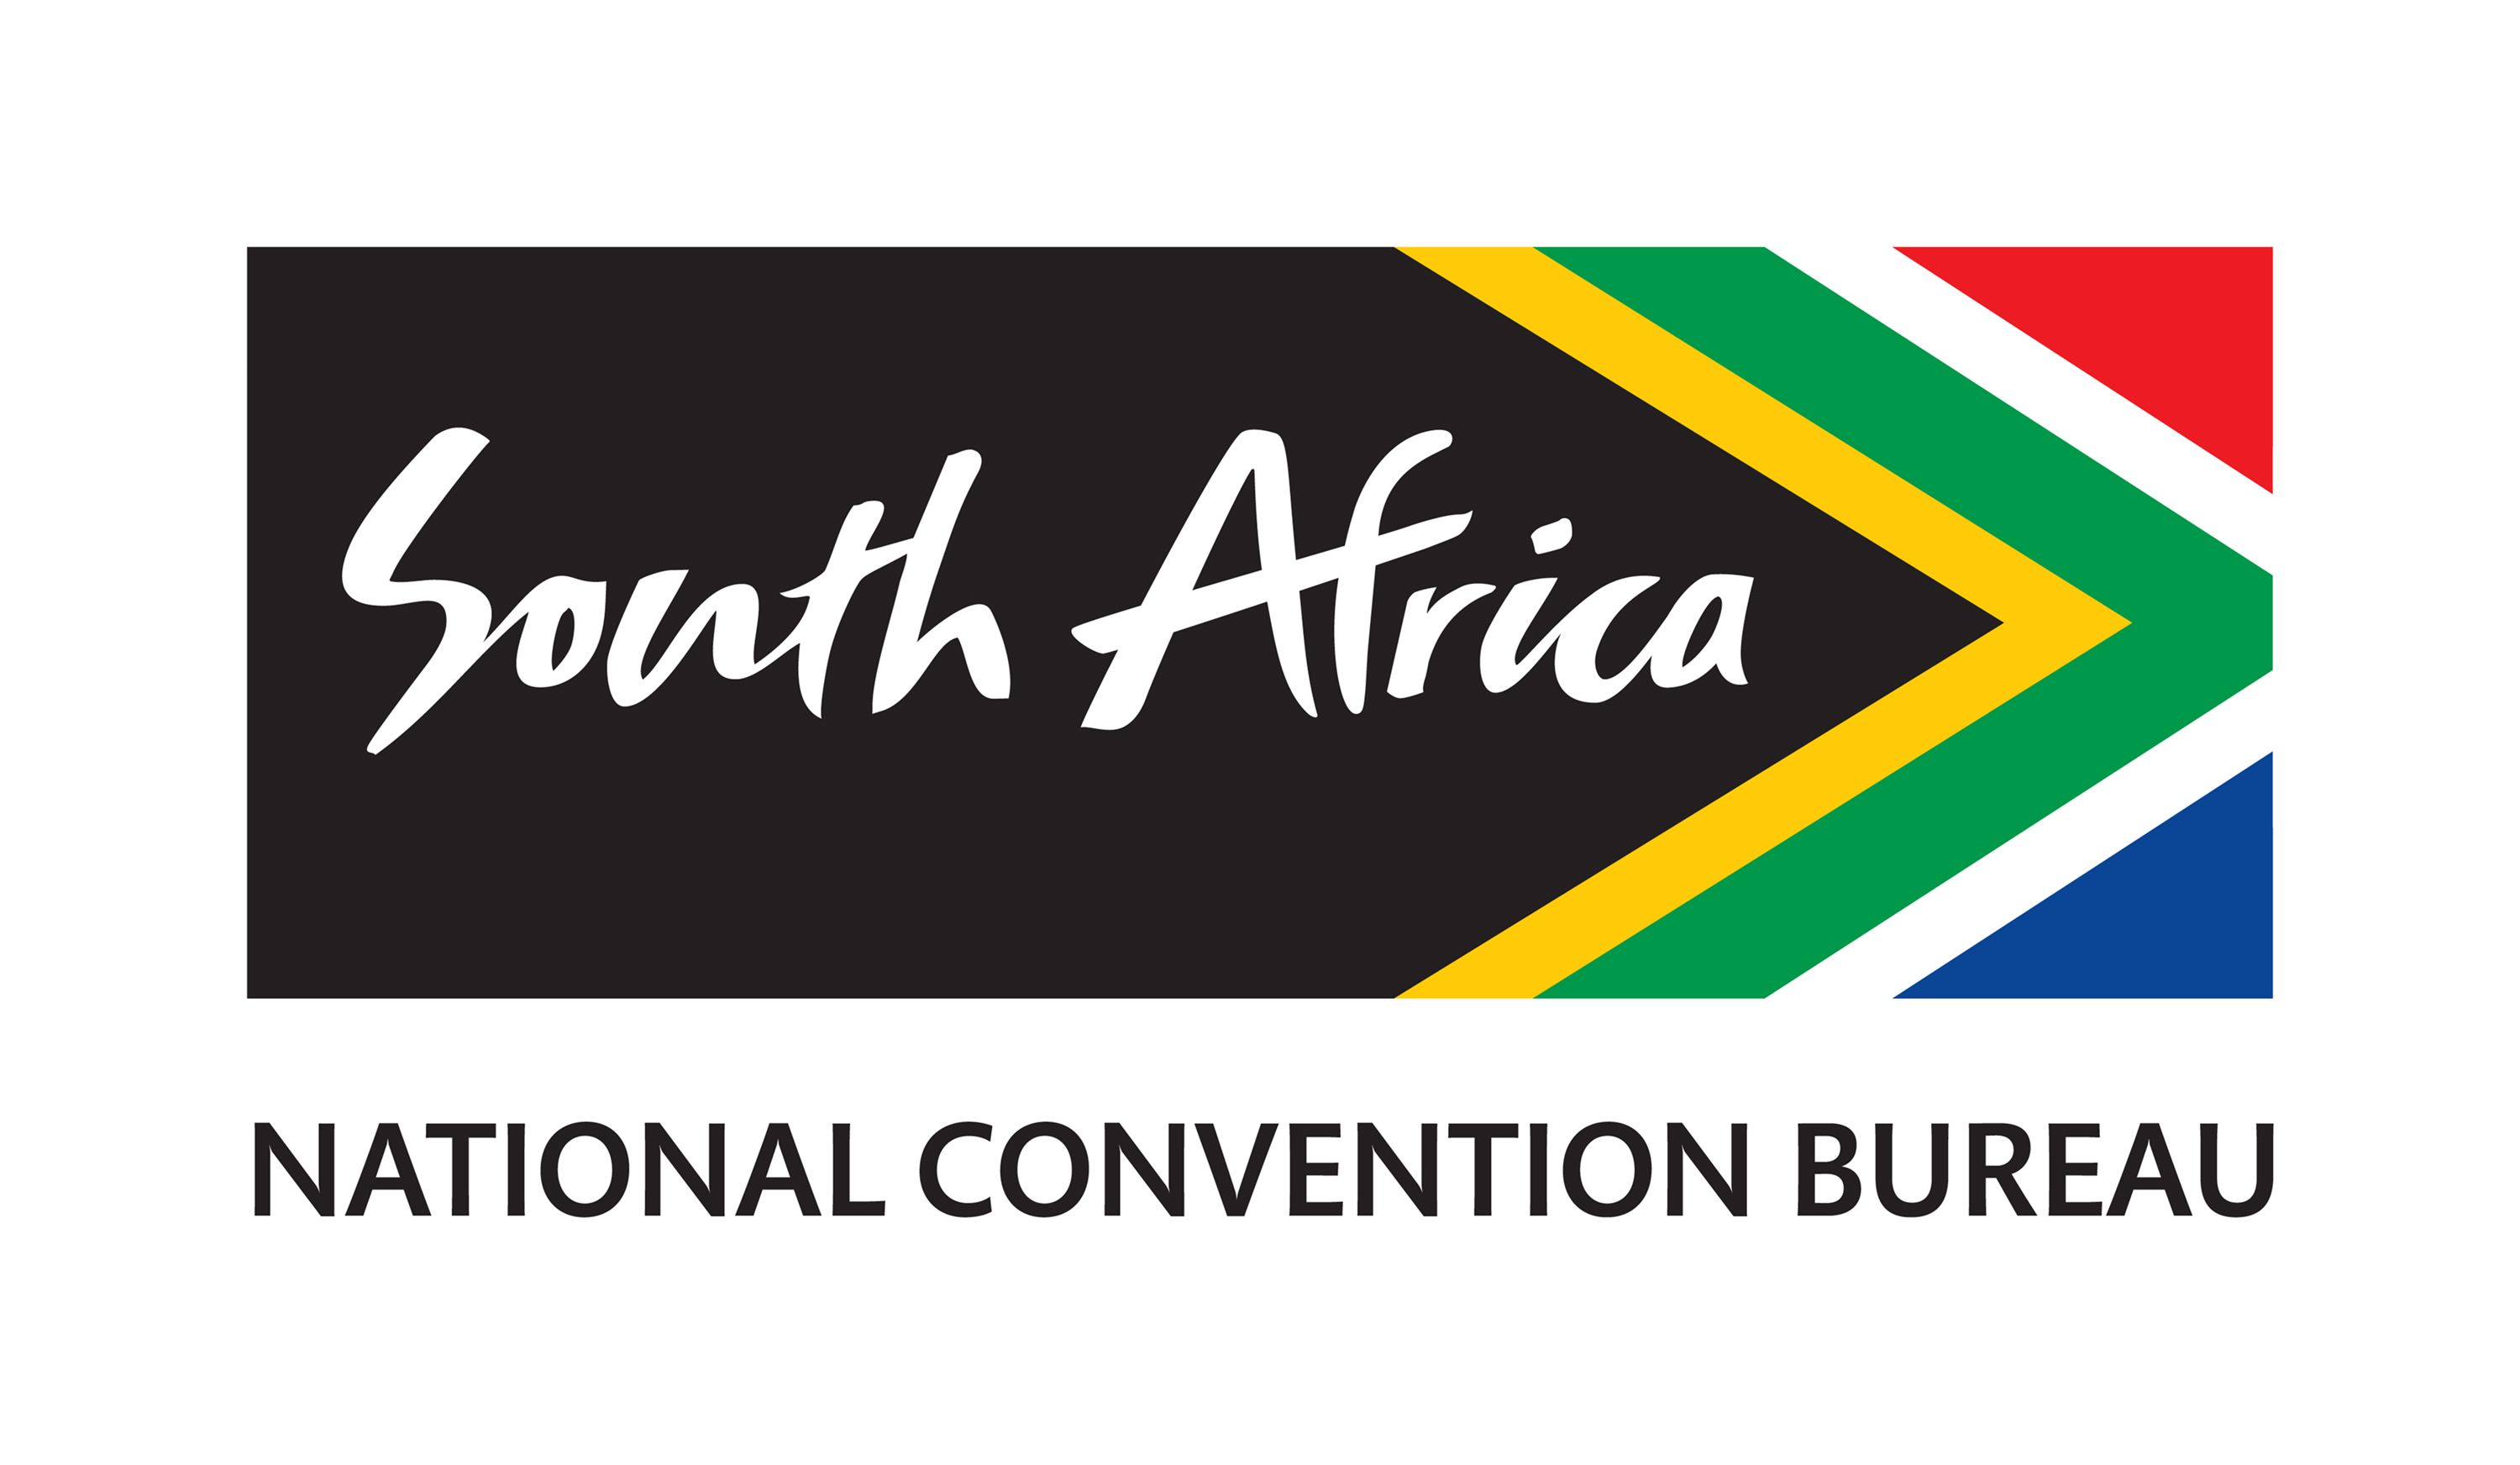 South Africa National Convention Bureau